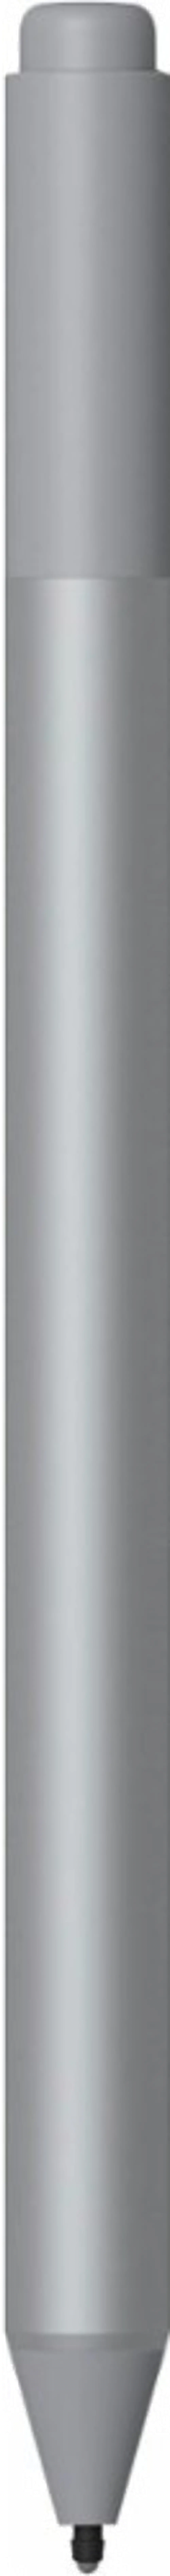 EYU-00009 Microsoft Silver Surface Pen-1